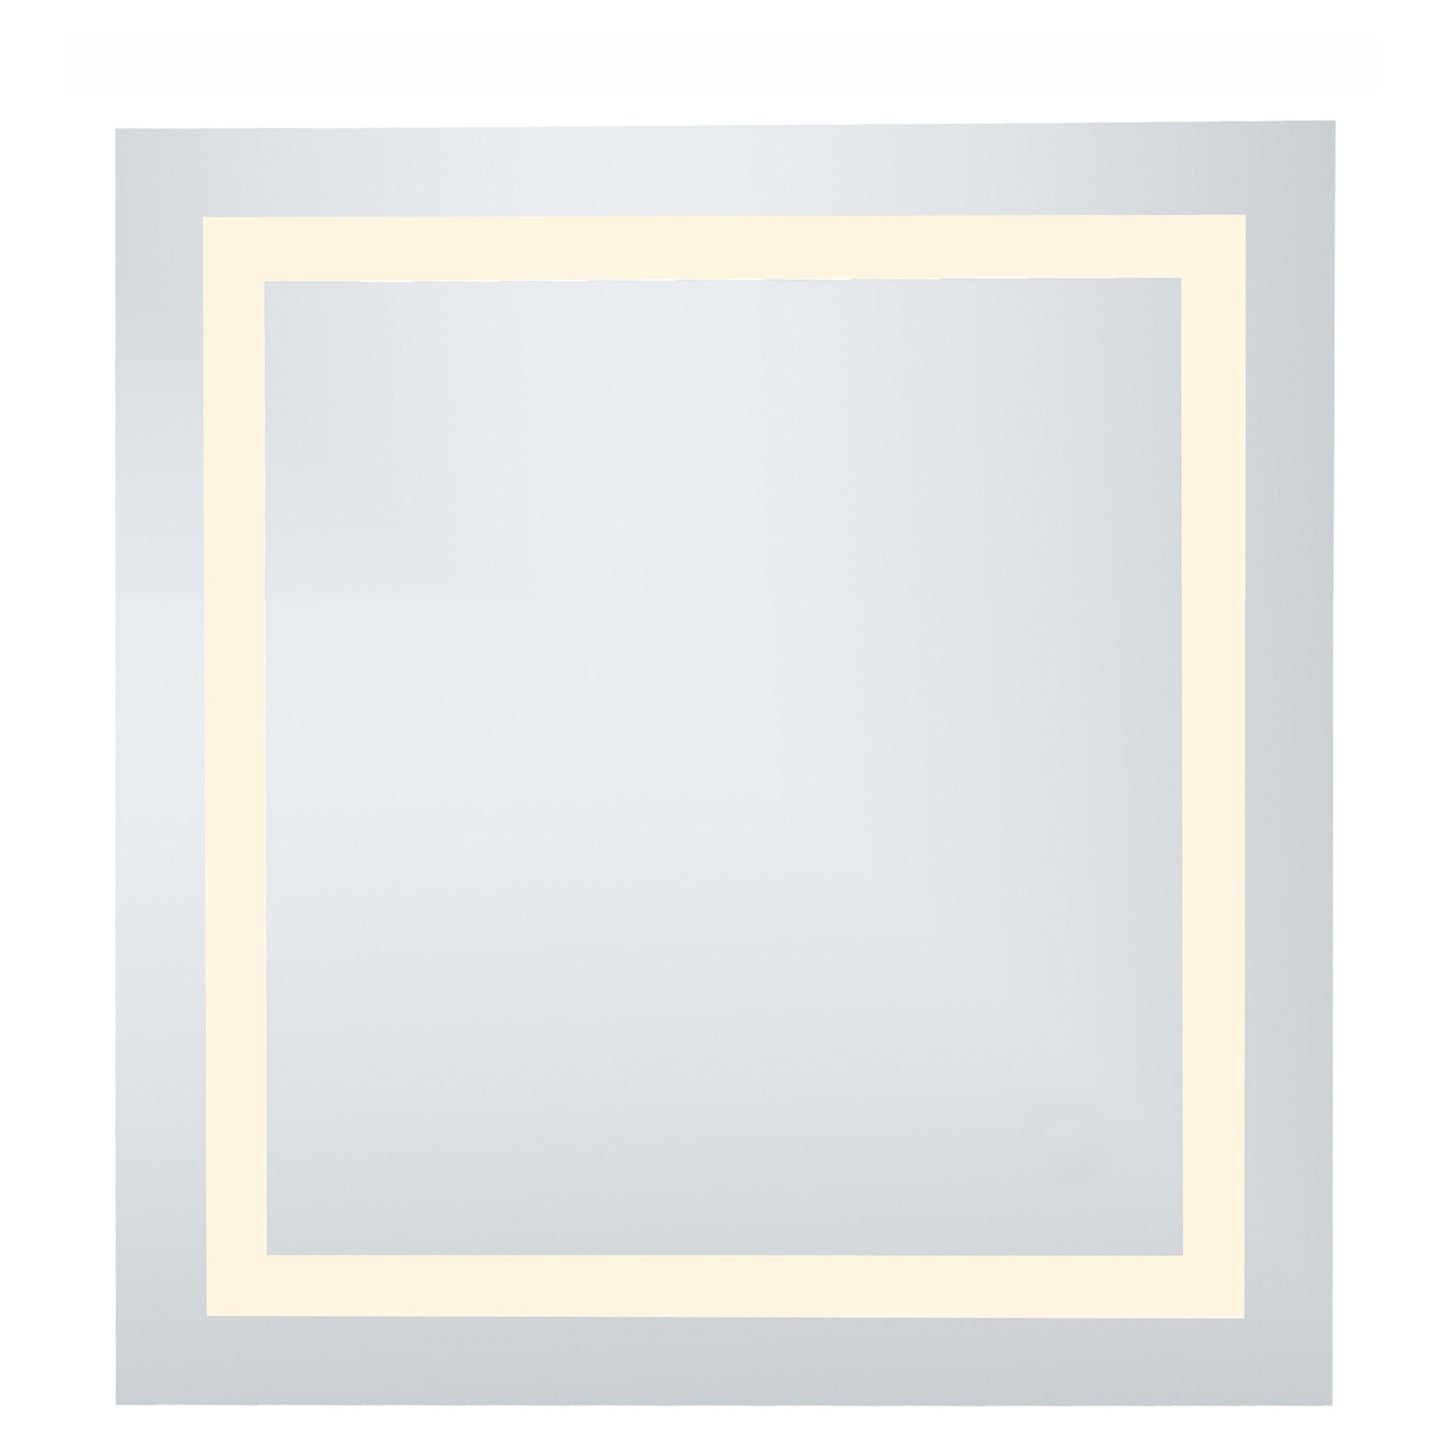 MRE-6020 Nova 28" x 28" LED Mirror in Glossy White - 3000K